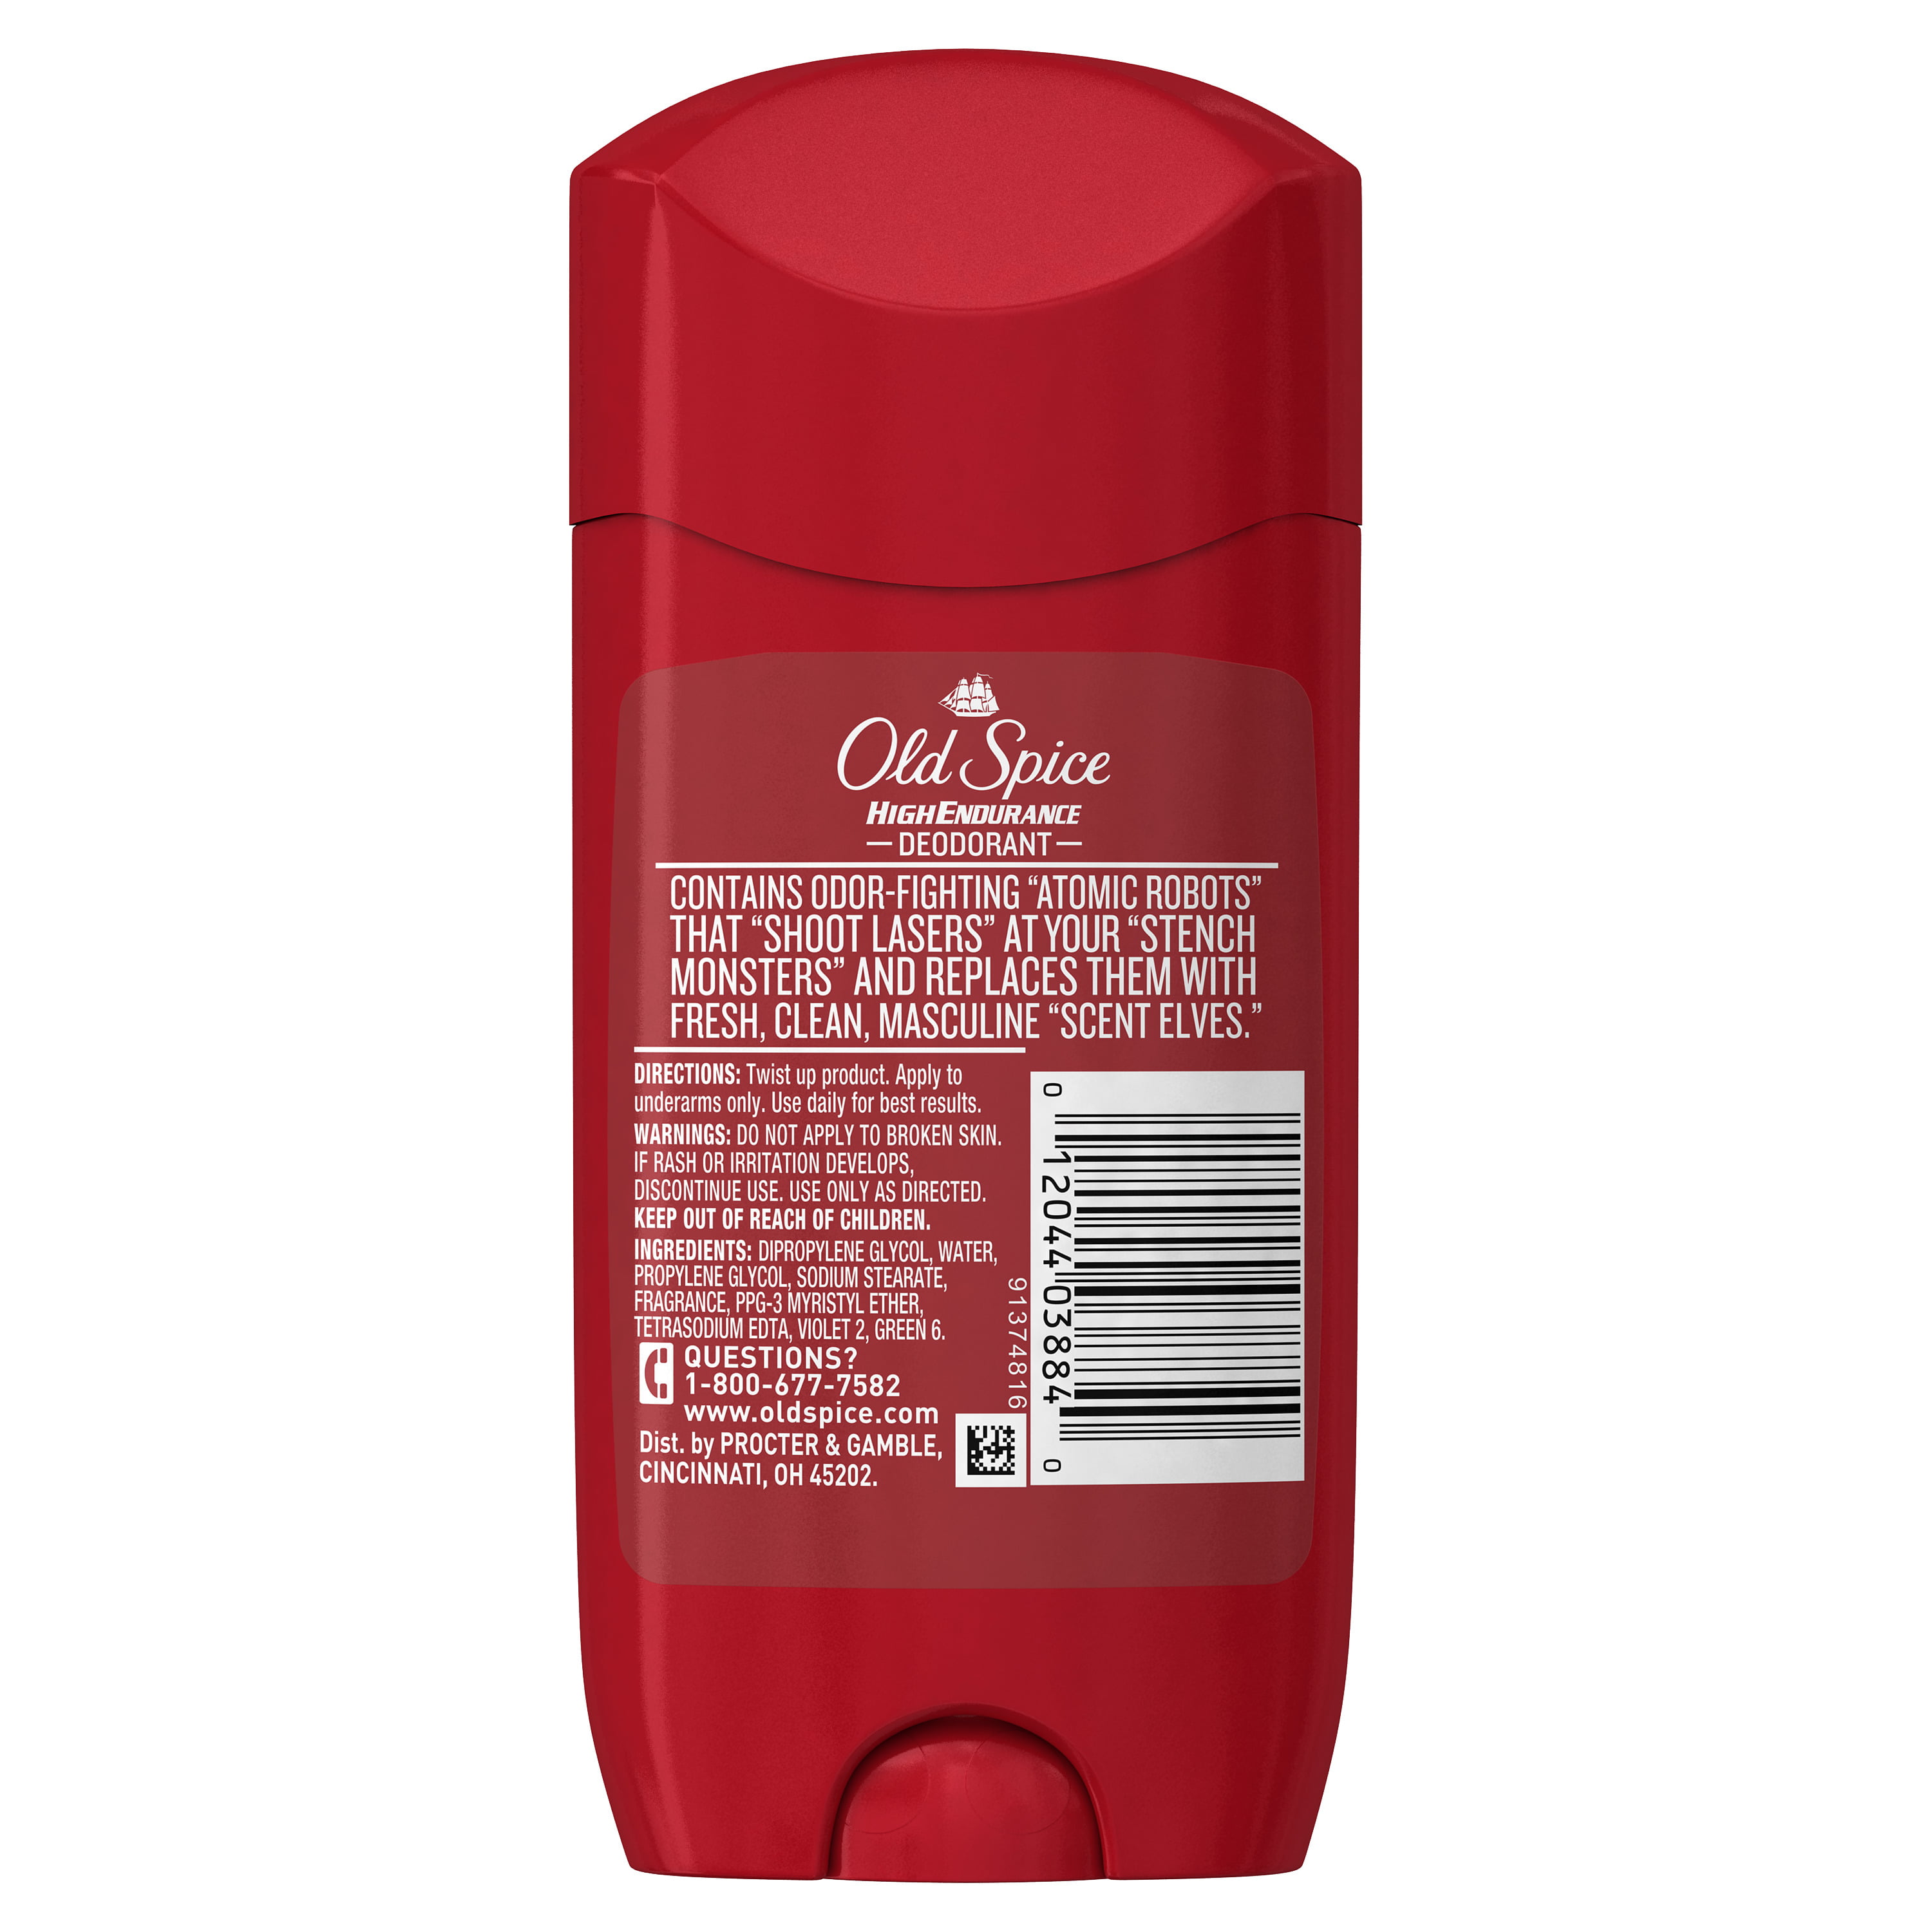 katje Regulatie Moeras Old Spice High Endurance Fresh Scent Deodorant for Men, 3.0 oz - Walmart.com